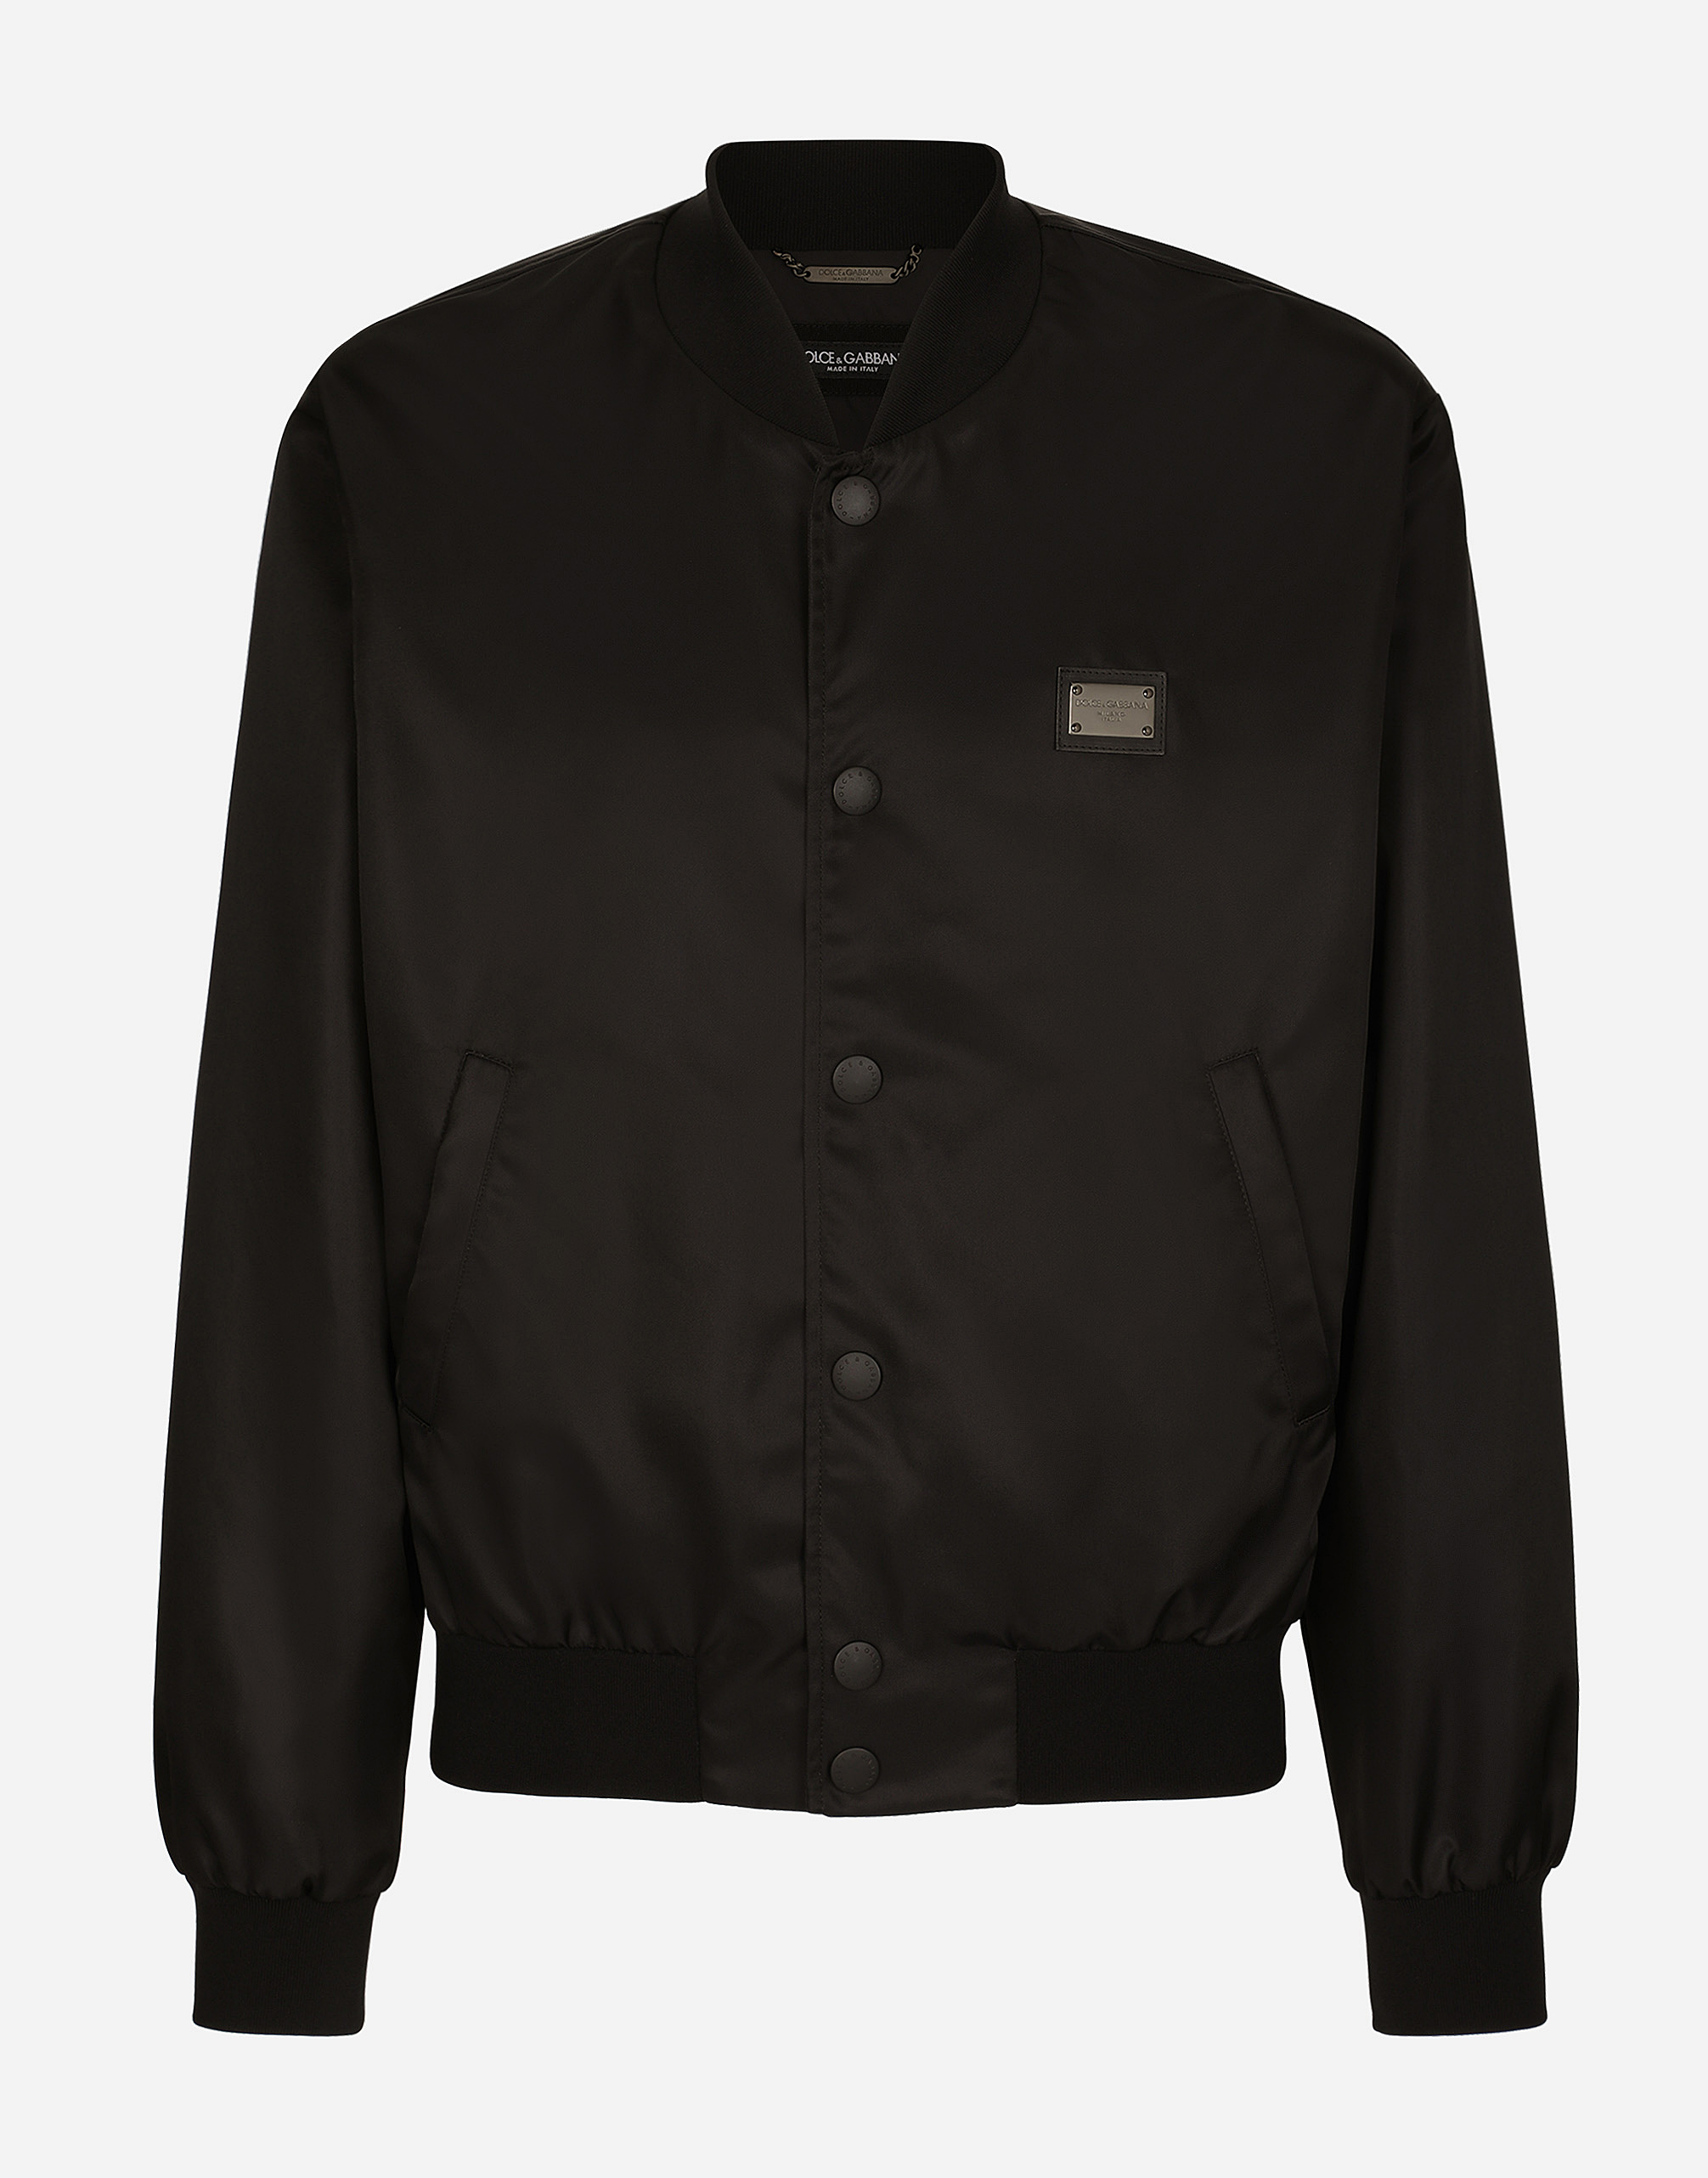 Dolce & Gabbana Nylon Jacket With Branded Tag In Black